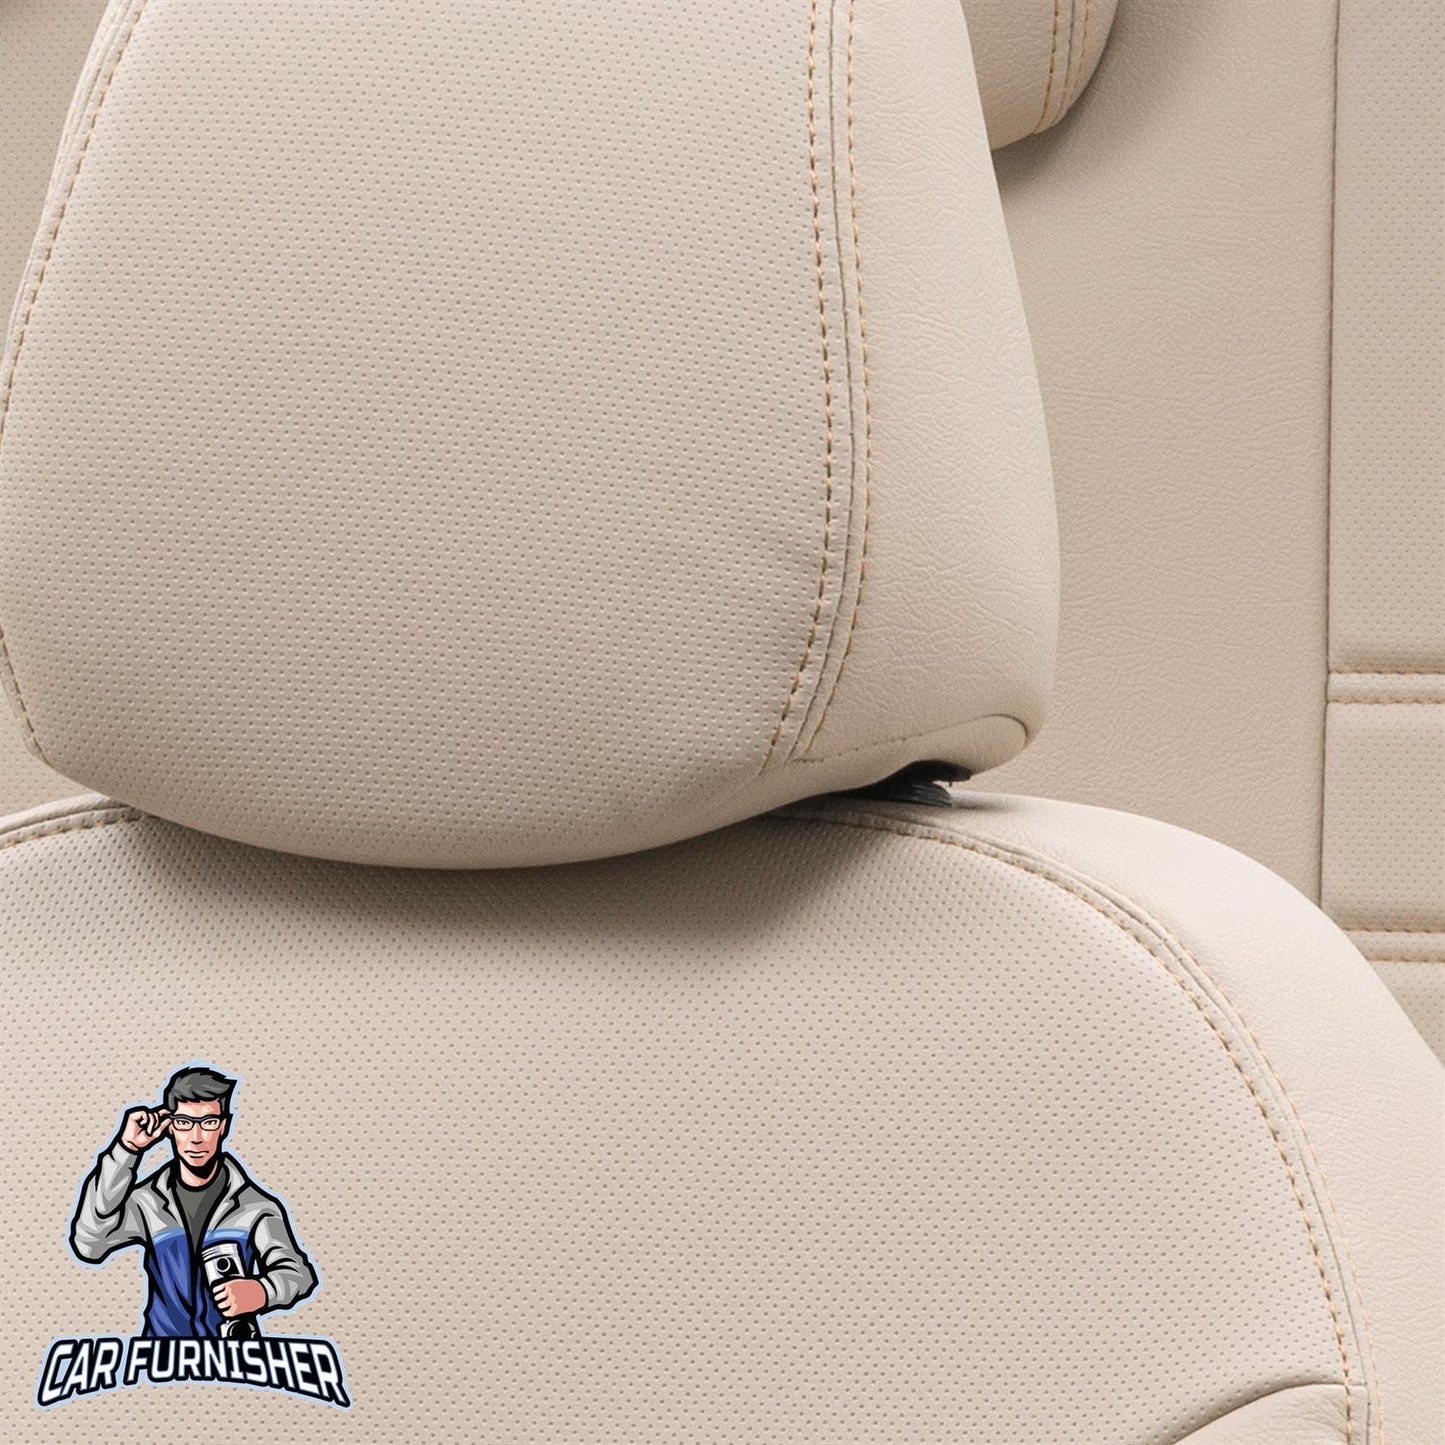 Skoda Yeti Seat Covers Istanbul Leather Design Beige Leather